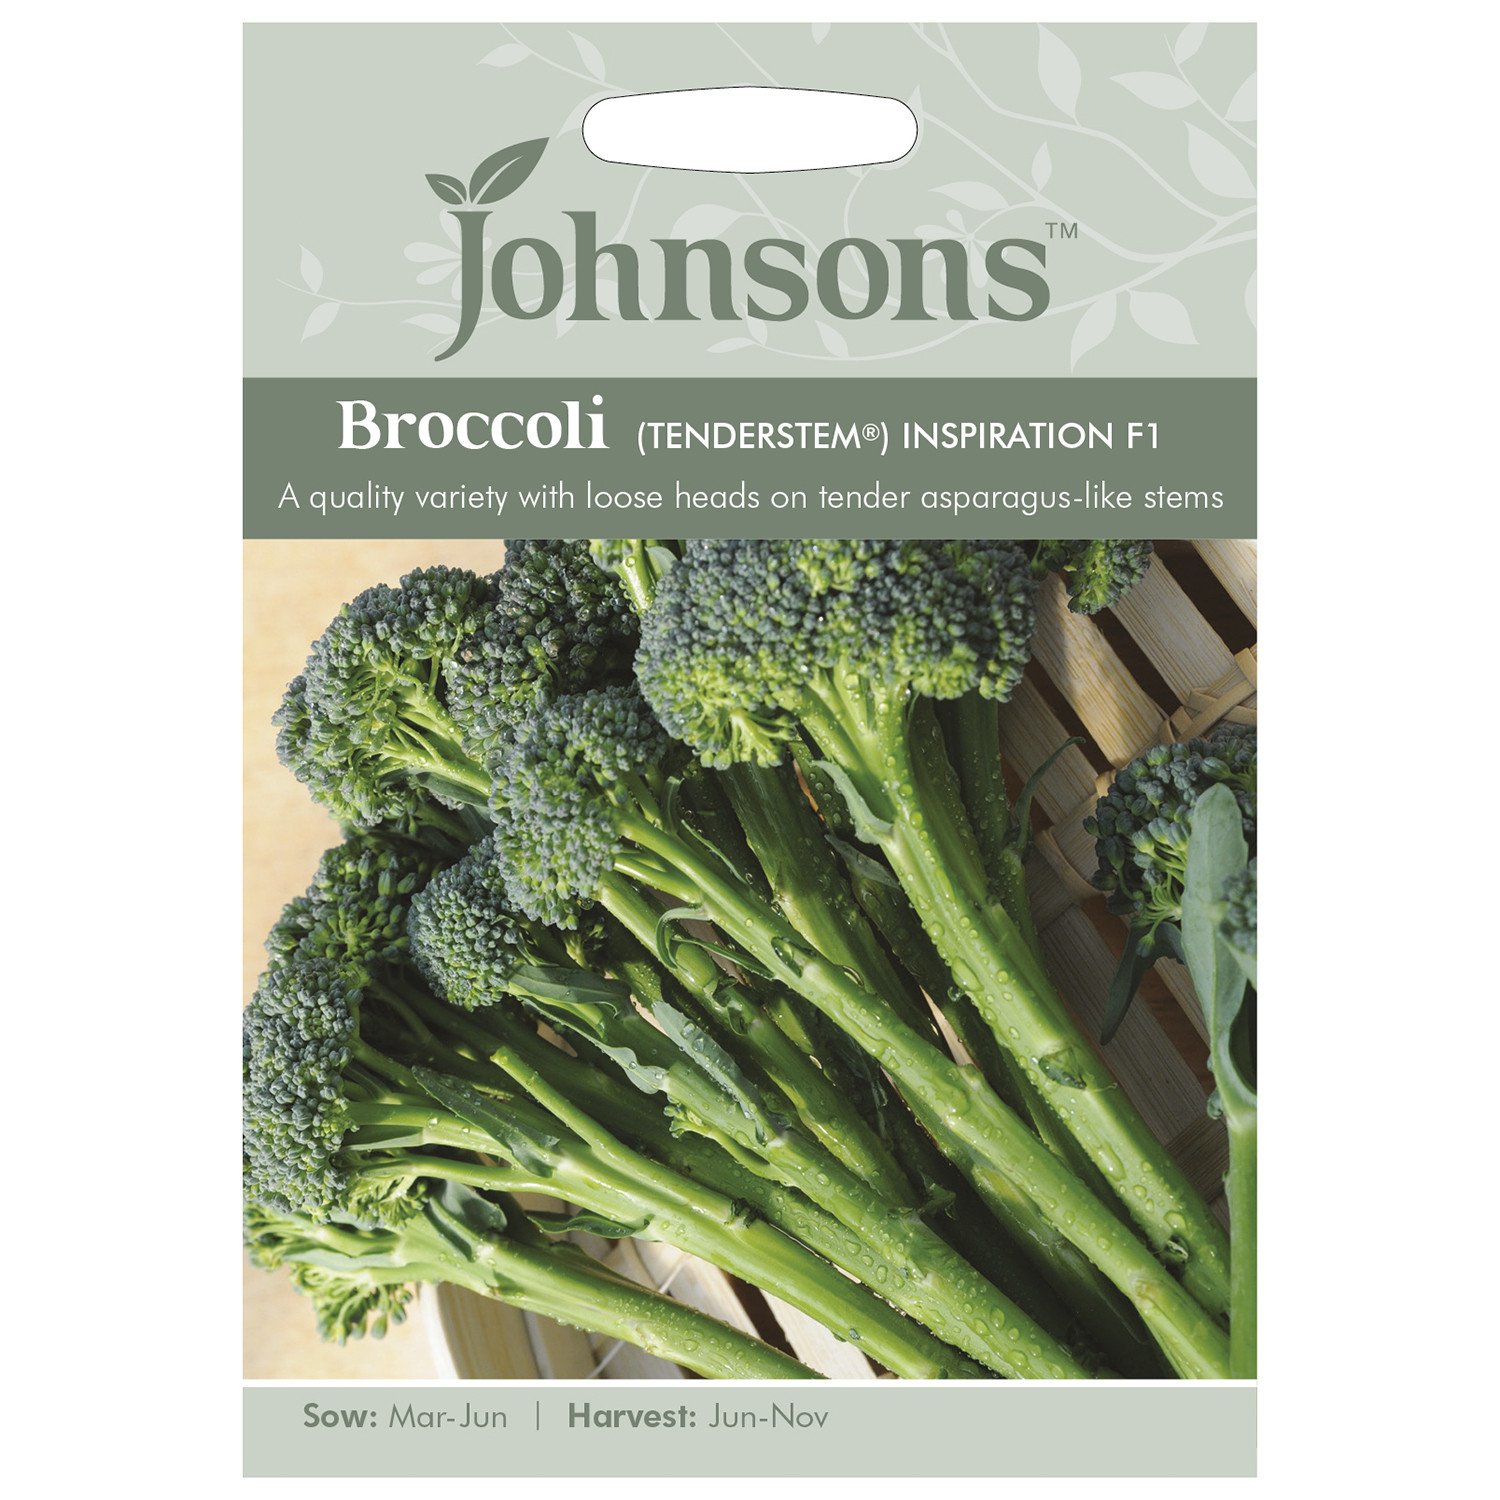 Broccoli Tenderstem Inspiration Image 1